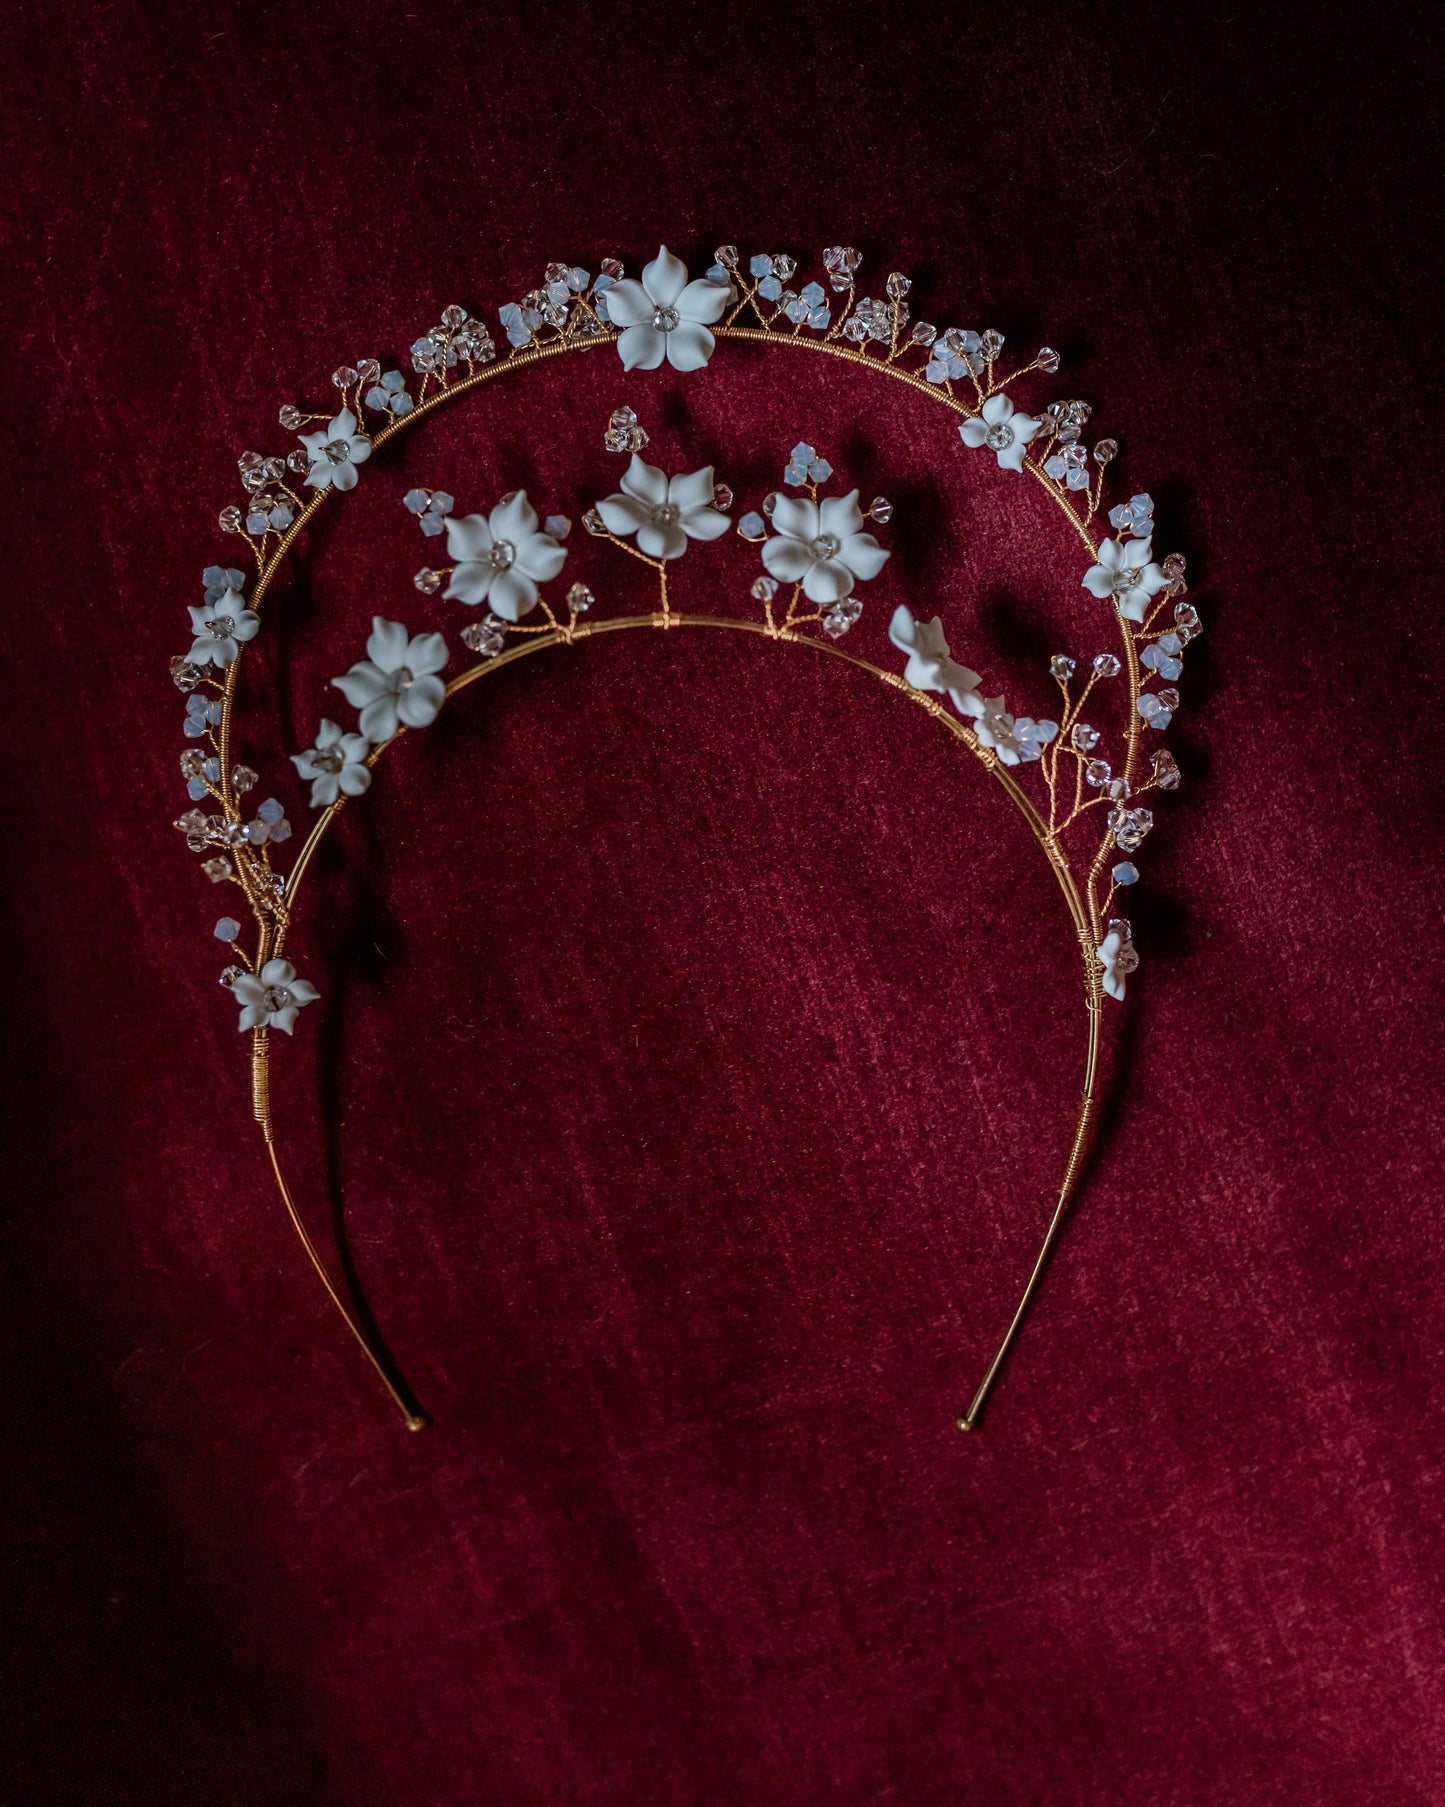 Lunar Blossom Crown